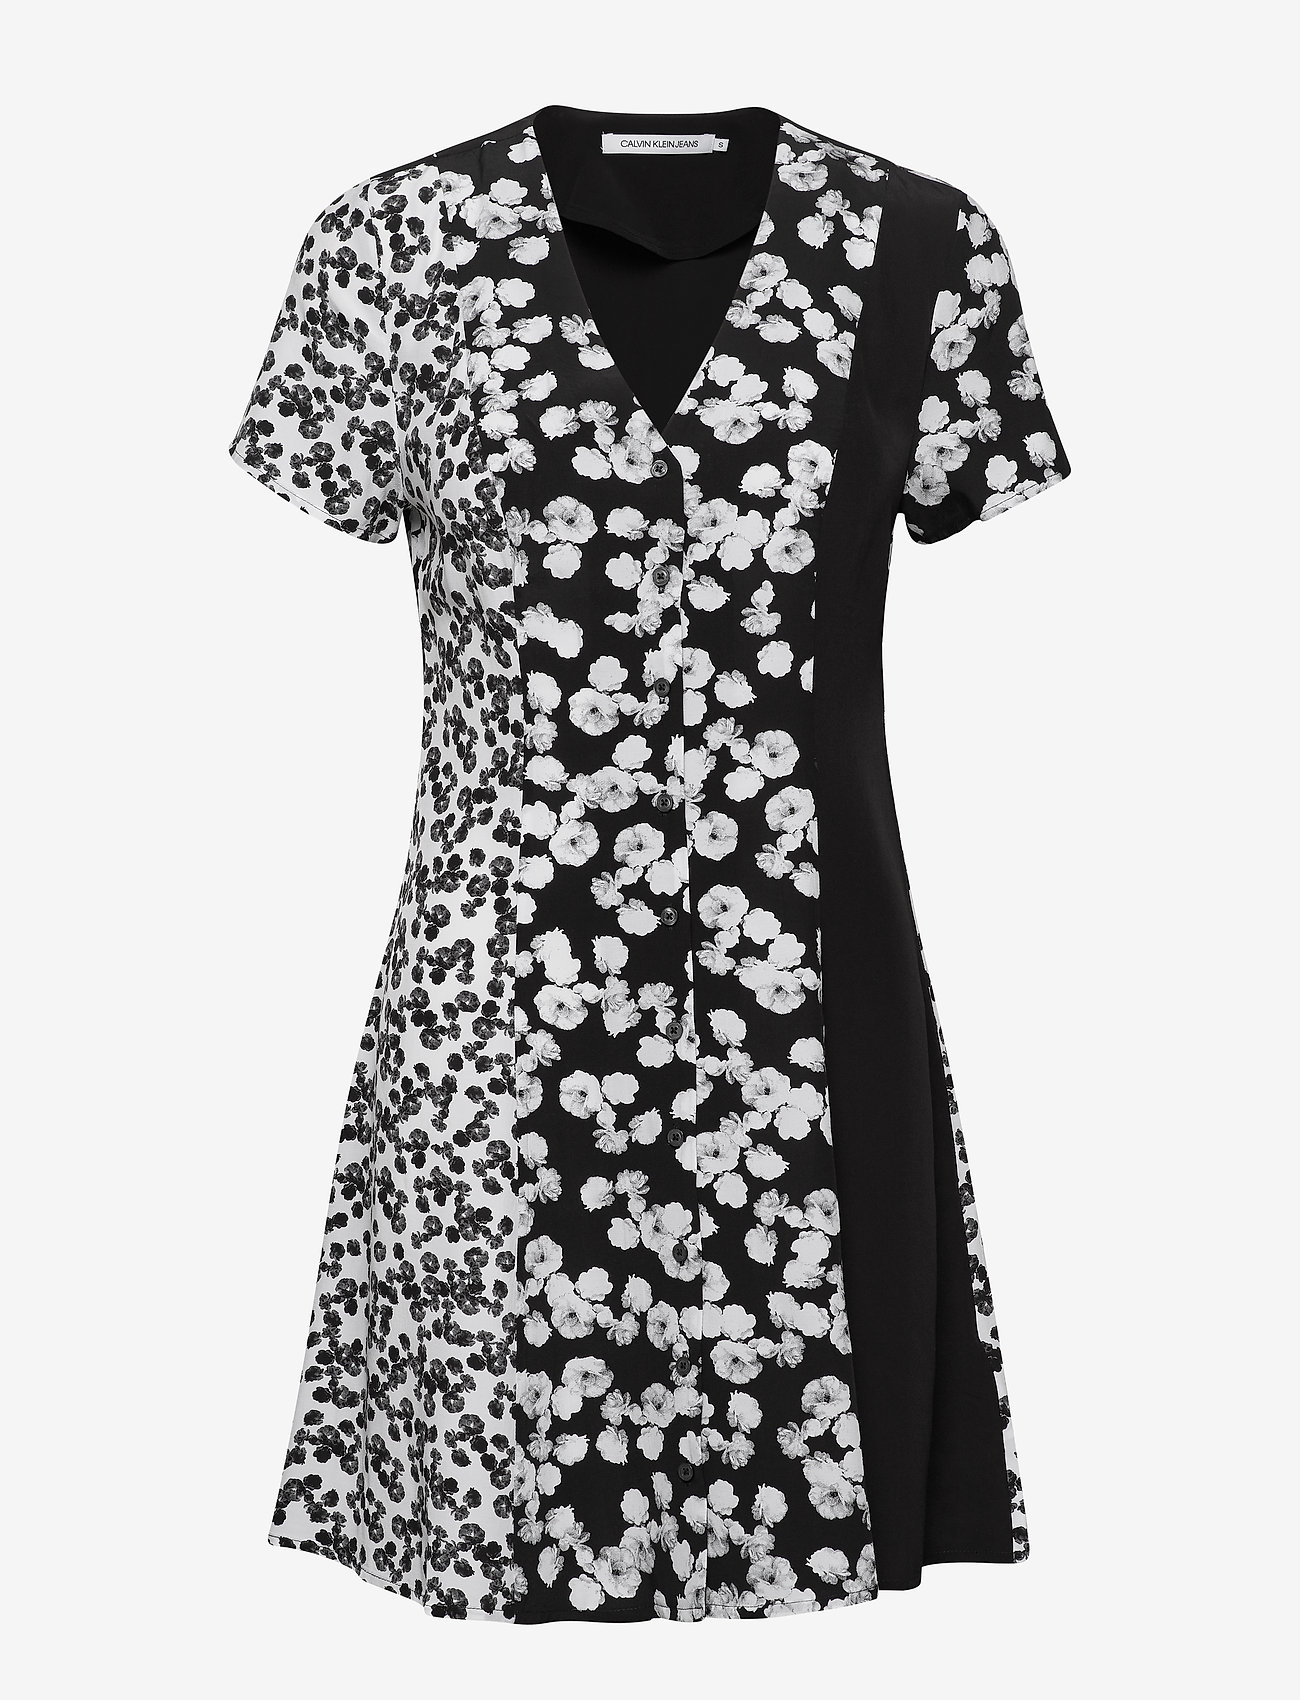 calvin klein black and white floral dress